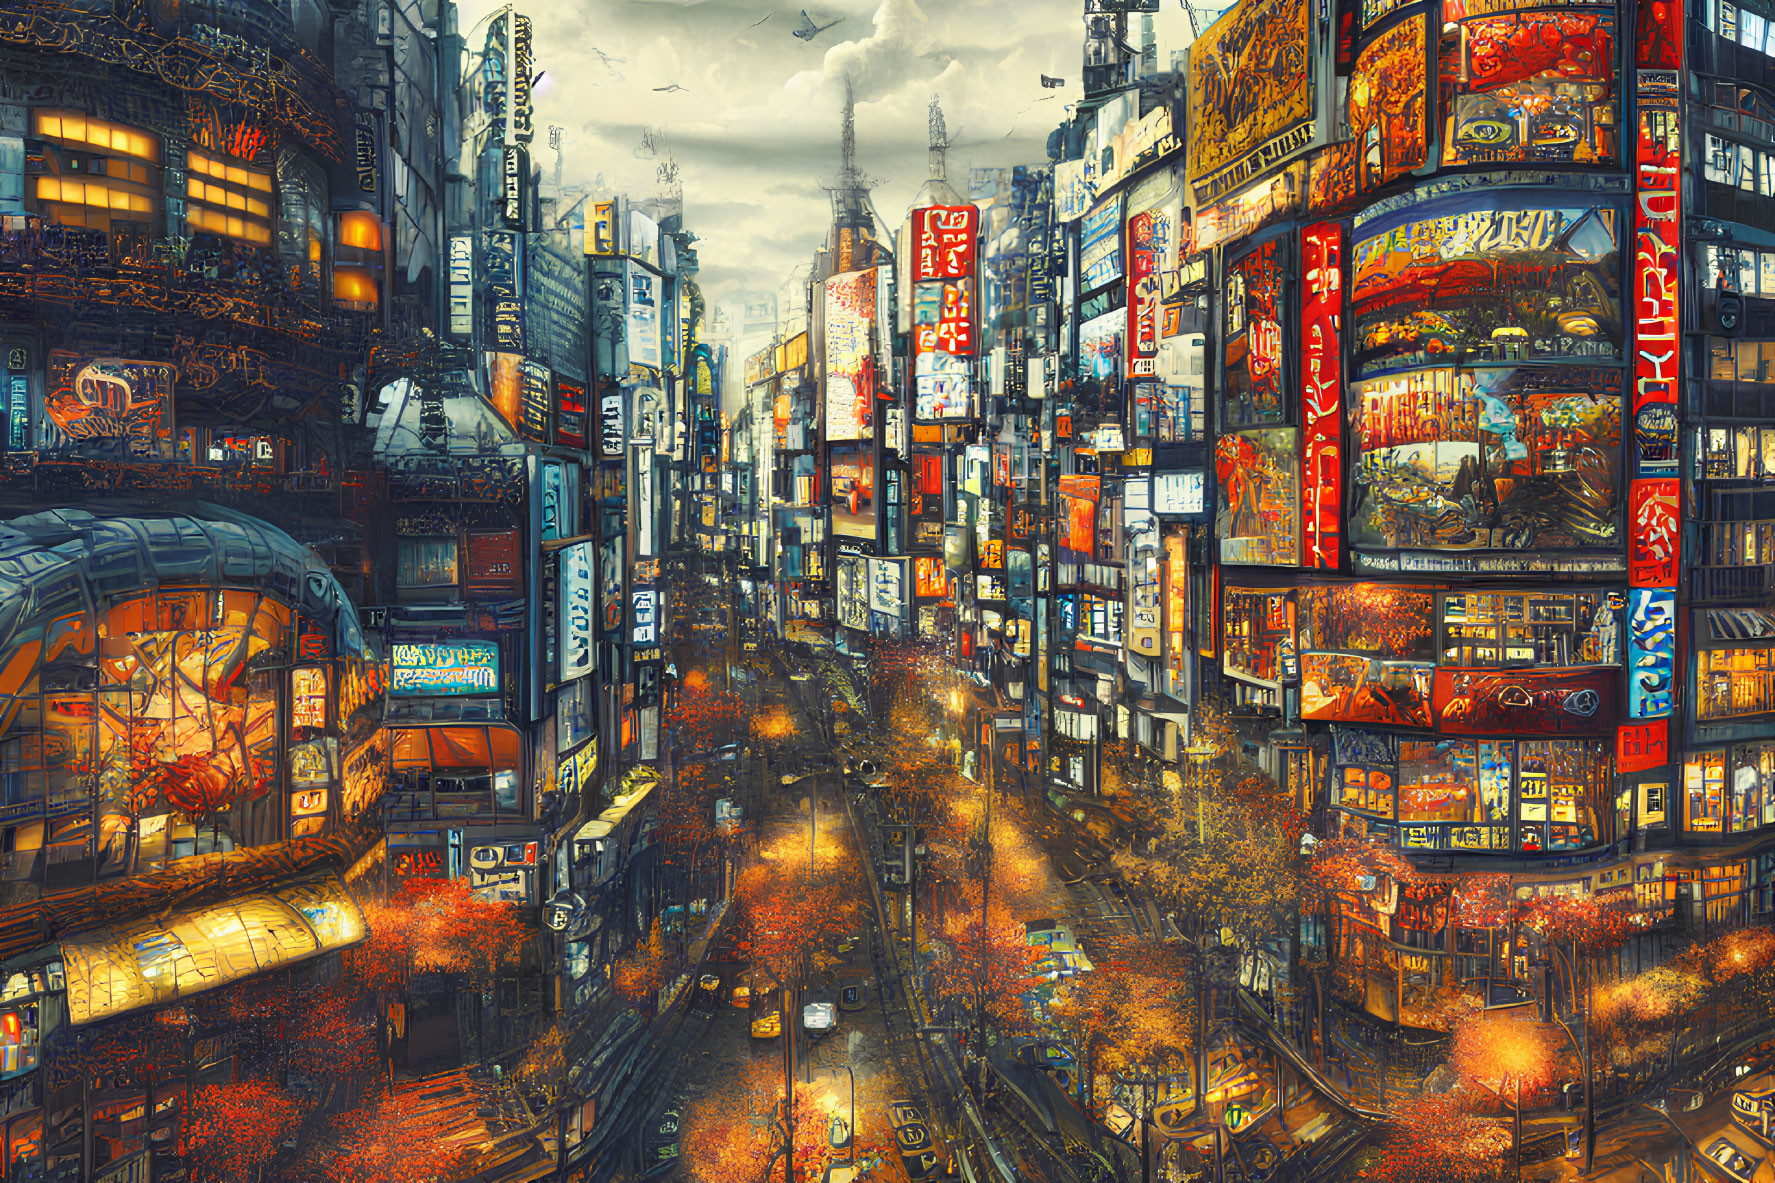 Vibrant Cyberpunk Cityscape with Illuminated Signage at Twilight